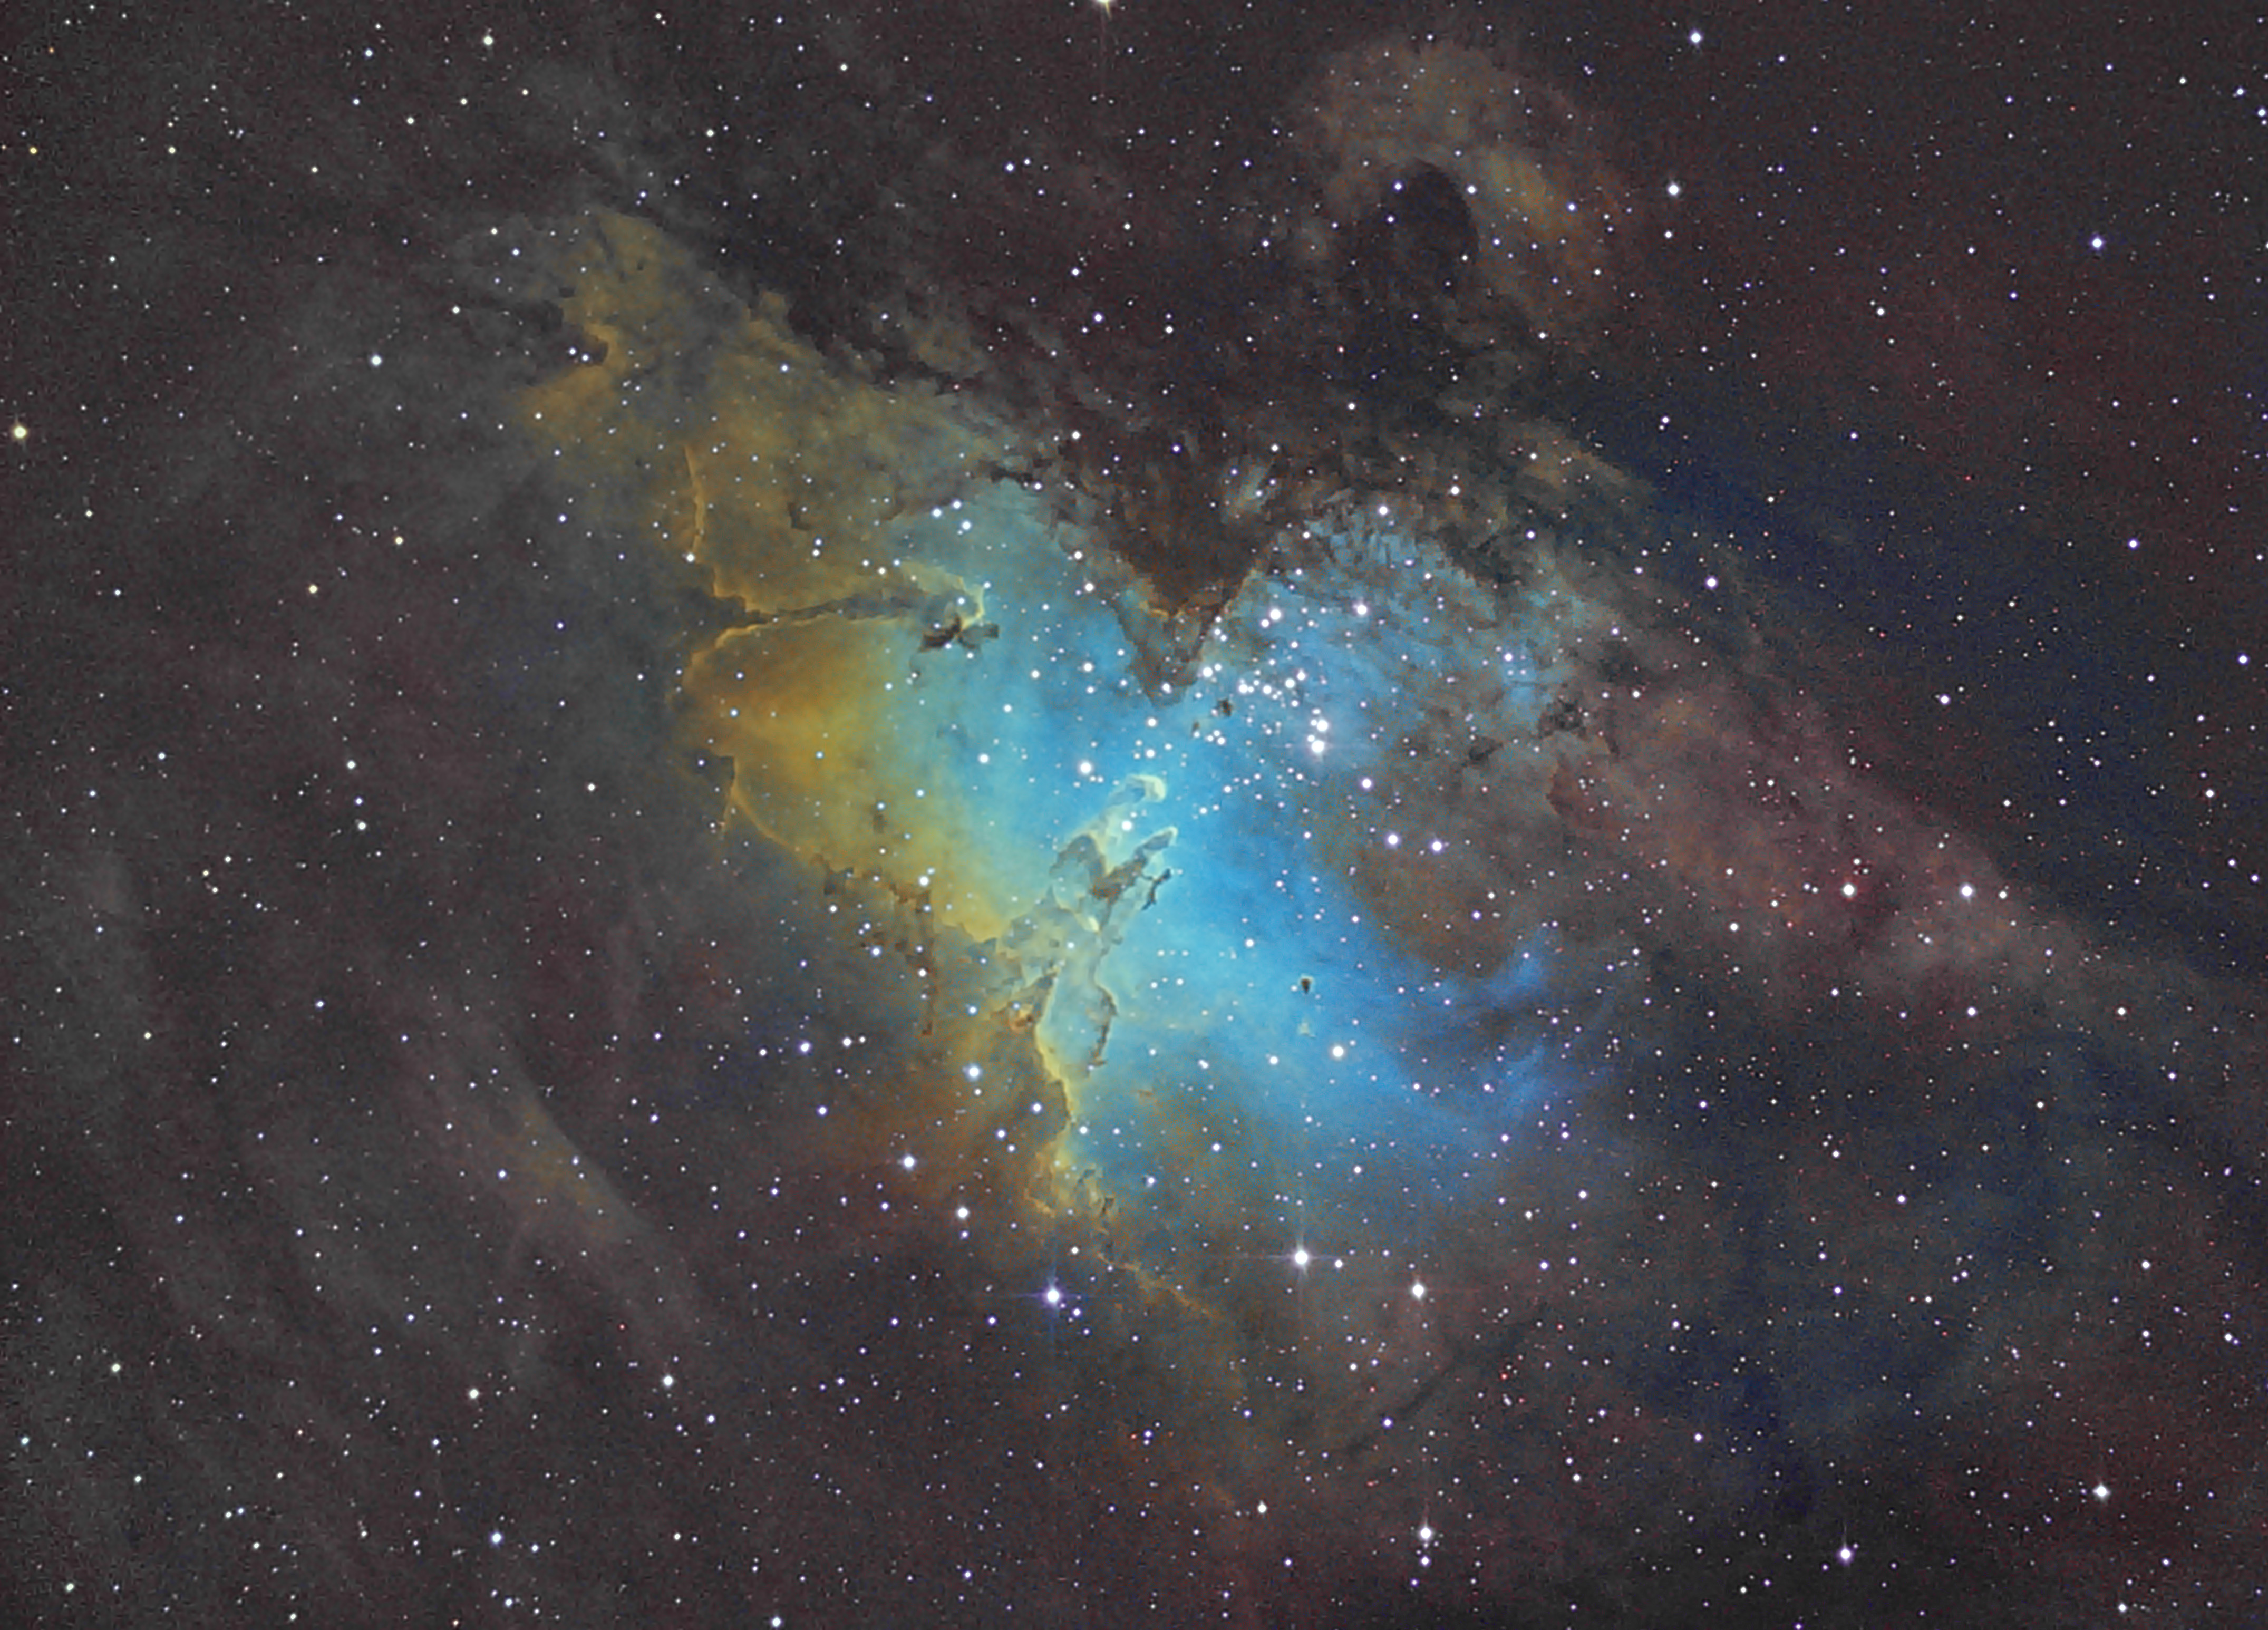 Eagle Nebula, M16 with the Pillars of Creation